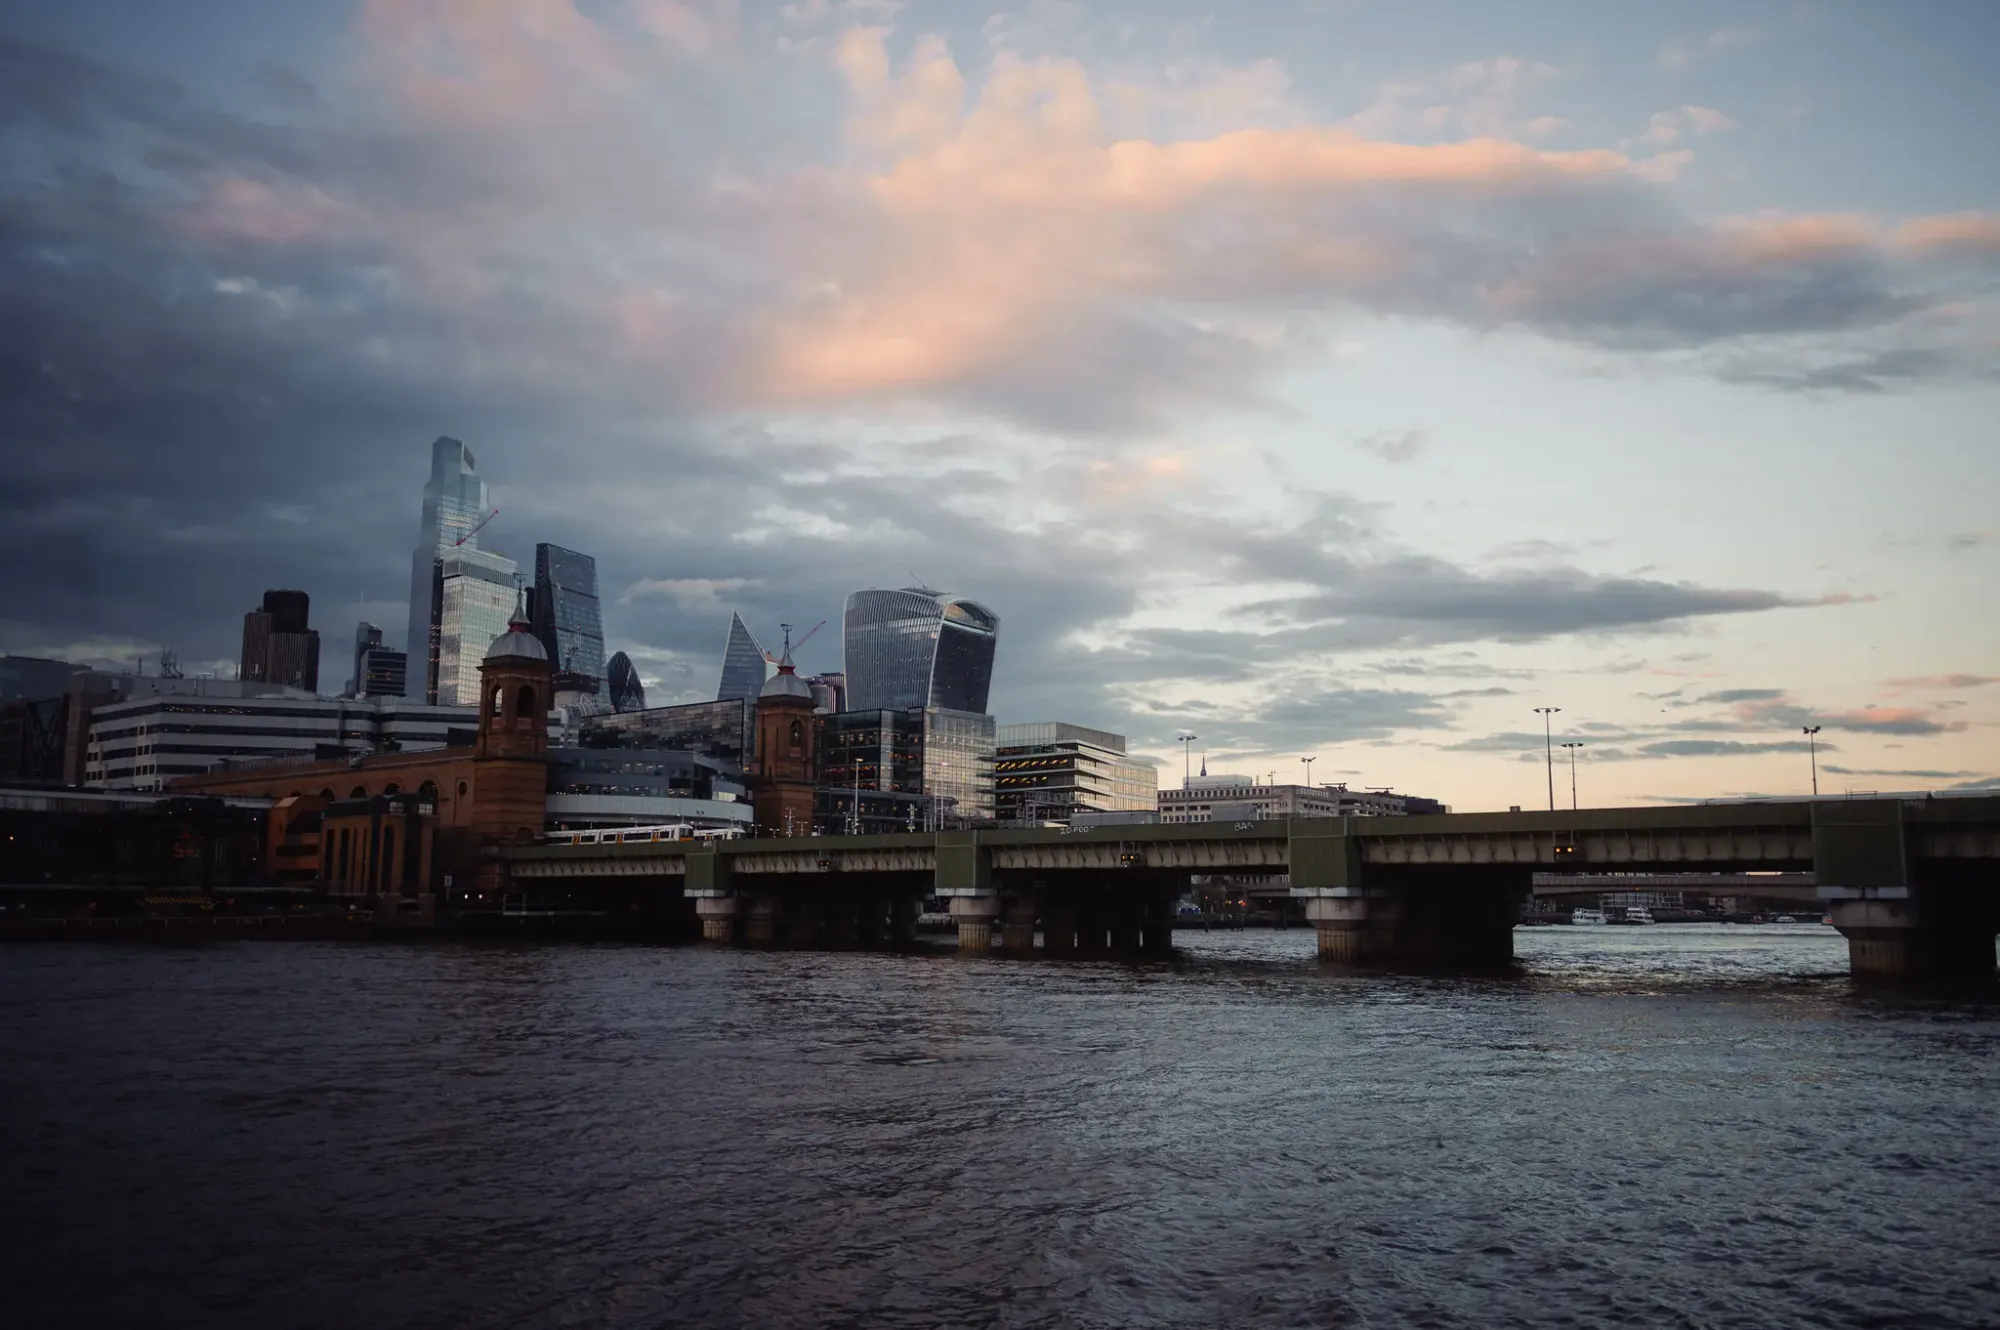 Evening Strolls - London Waterloo to London Bridge